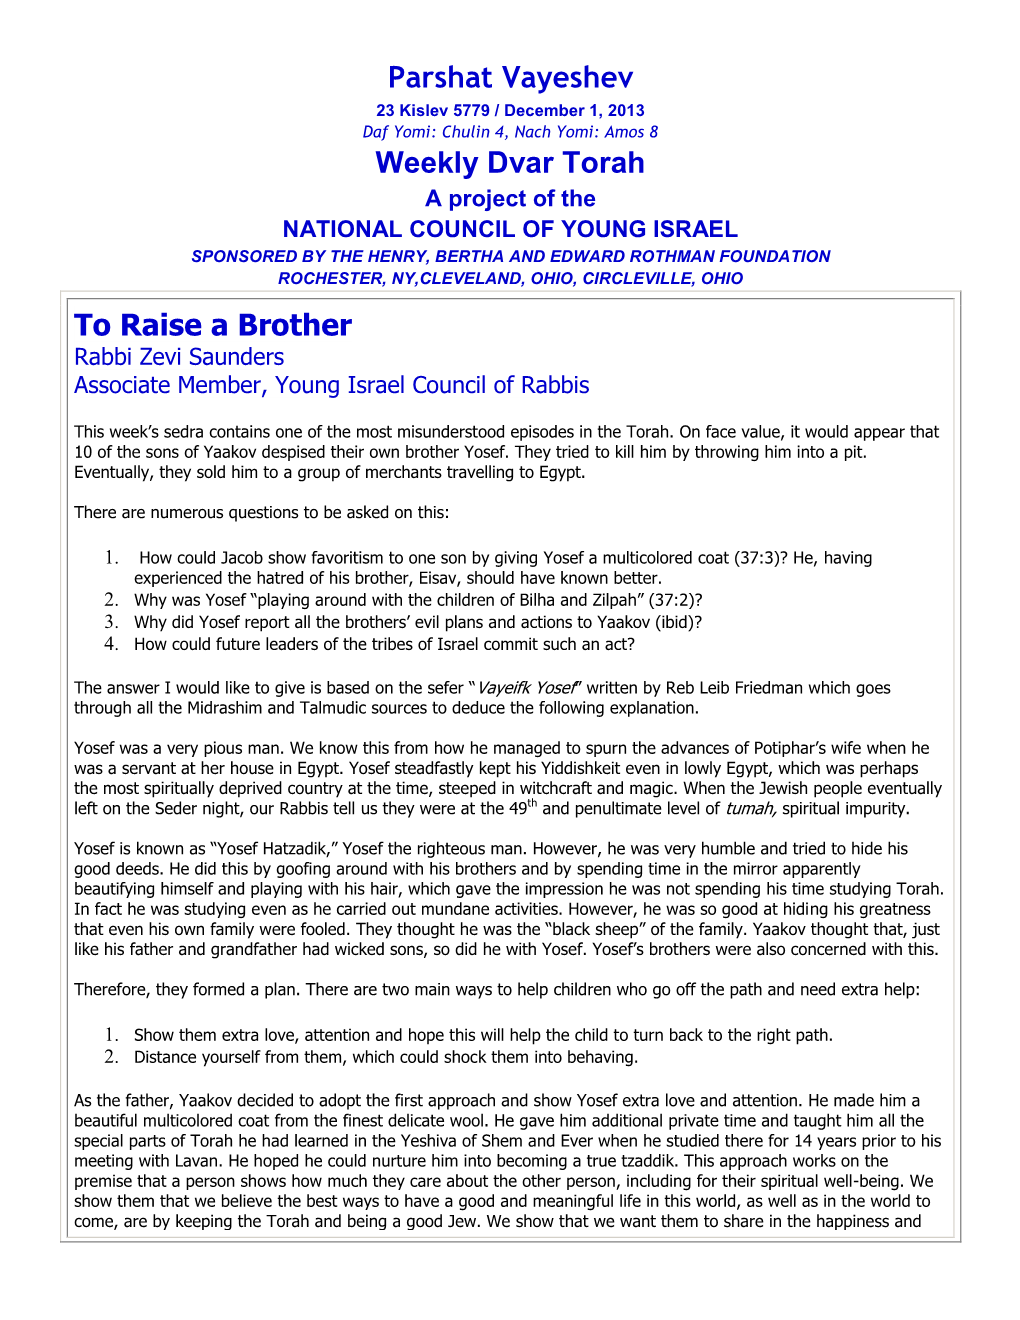 Parshat Vayeshev Weekly Dvar Torah to Raise a Brother